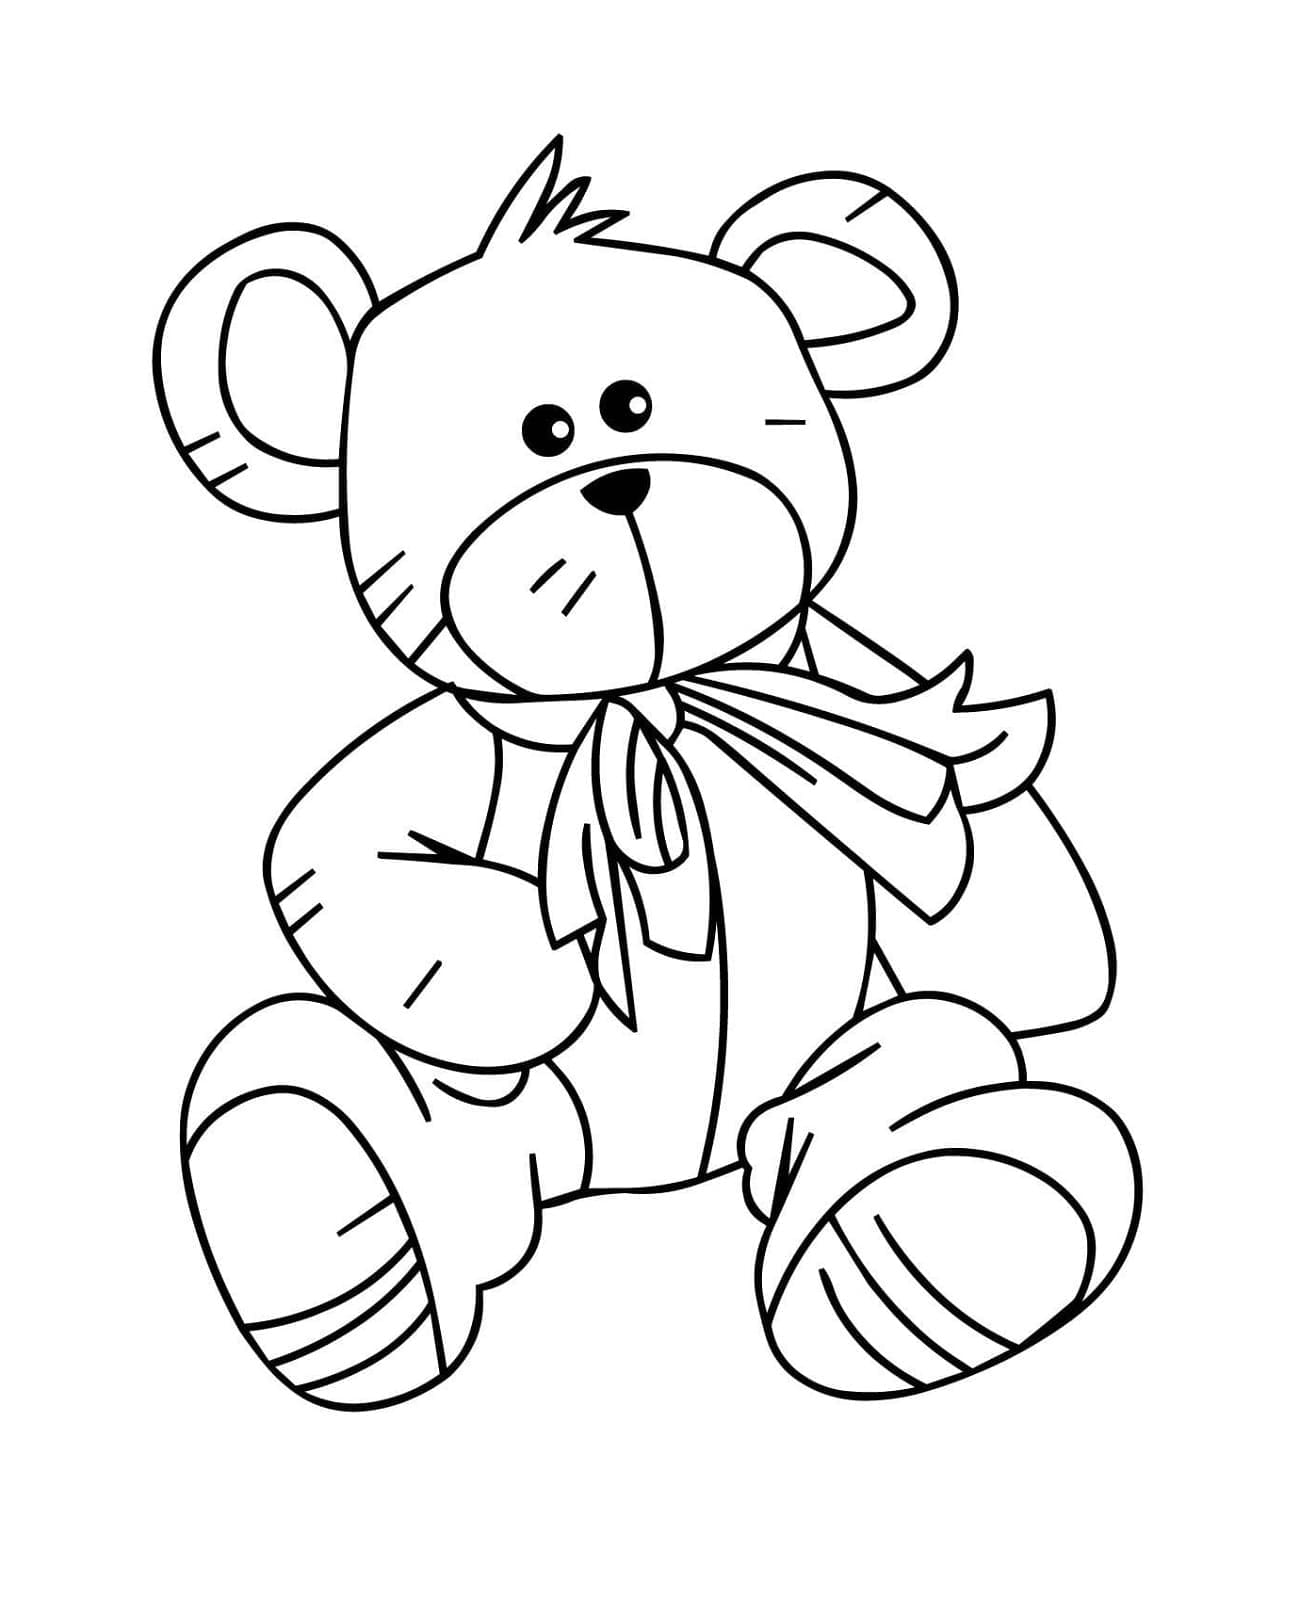 Printable Teddy Bear Coloring Page